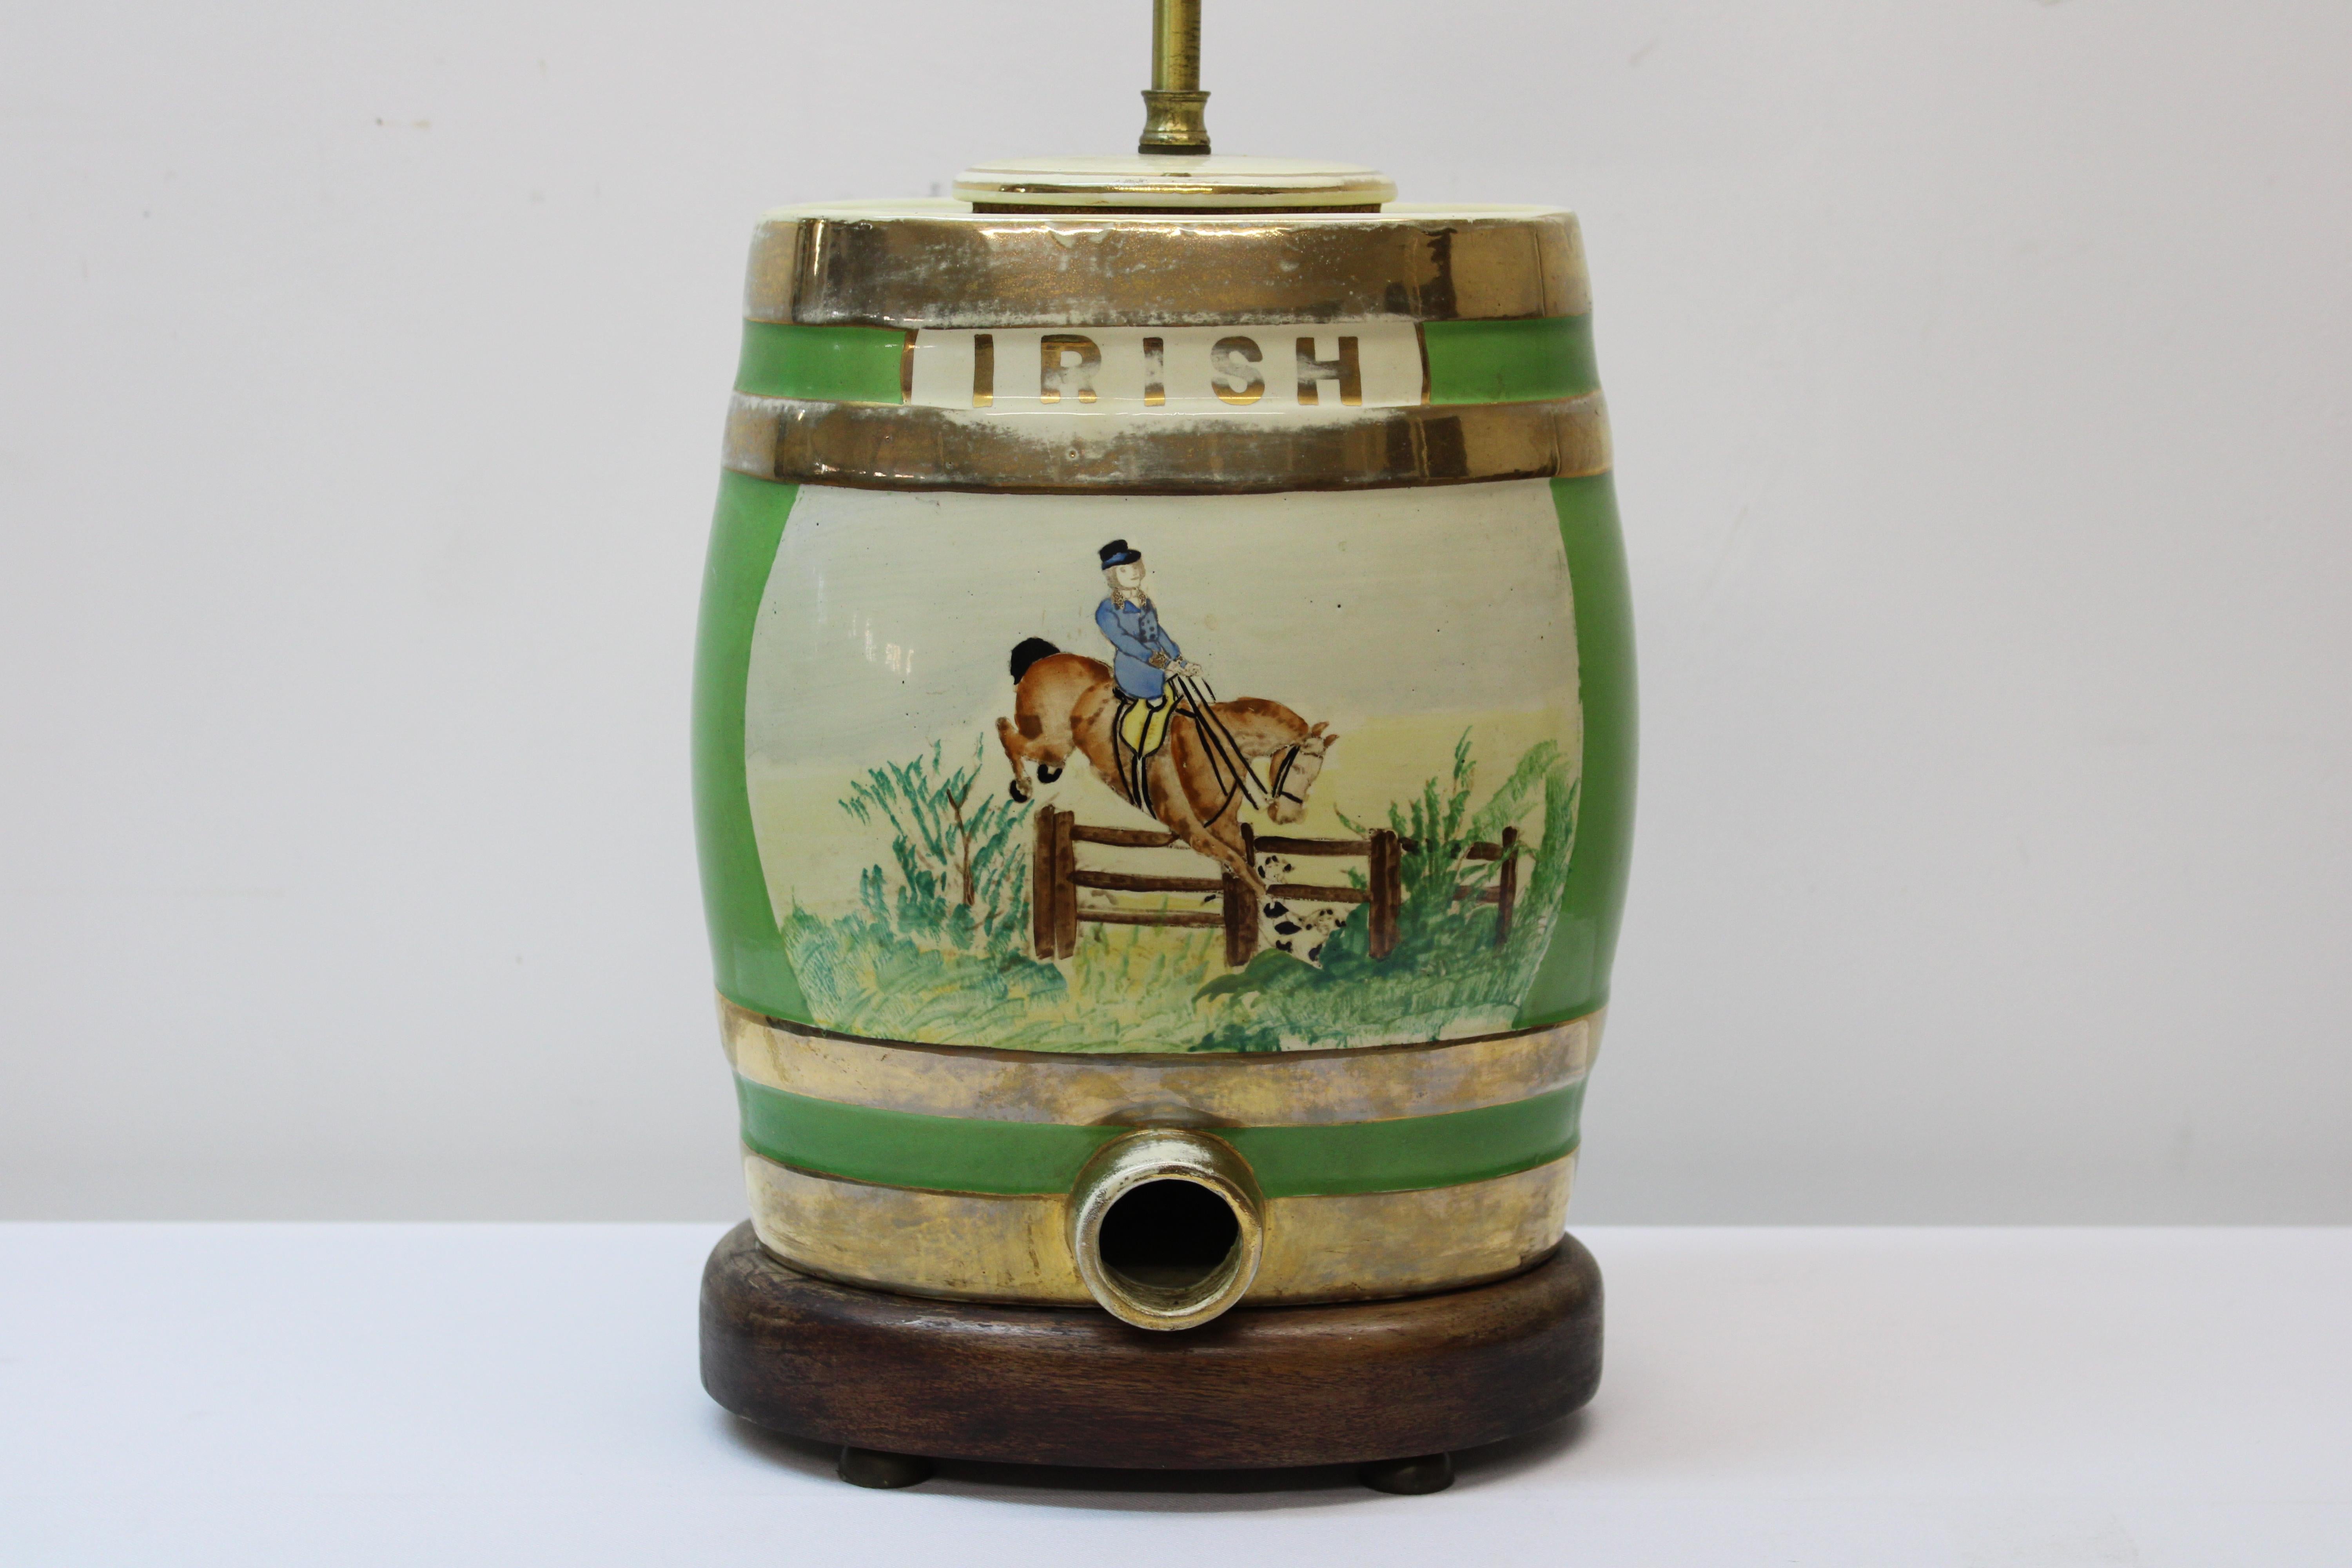 C. 19th century

Hand Painted Ceramic Irish whiskey jug converted to table lamp.